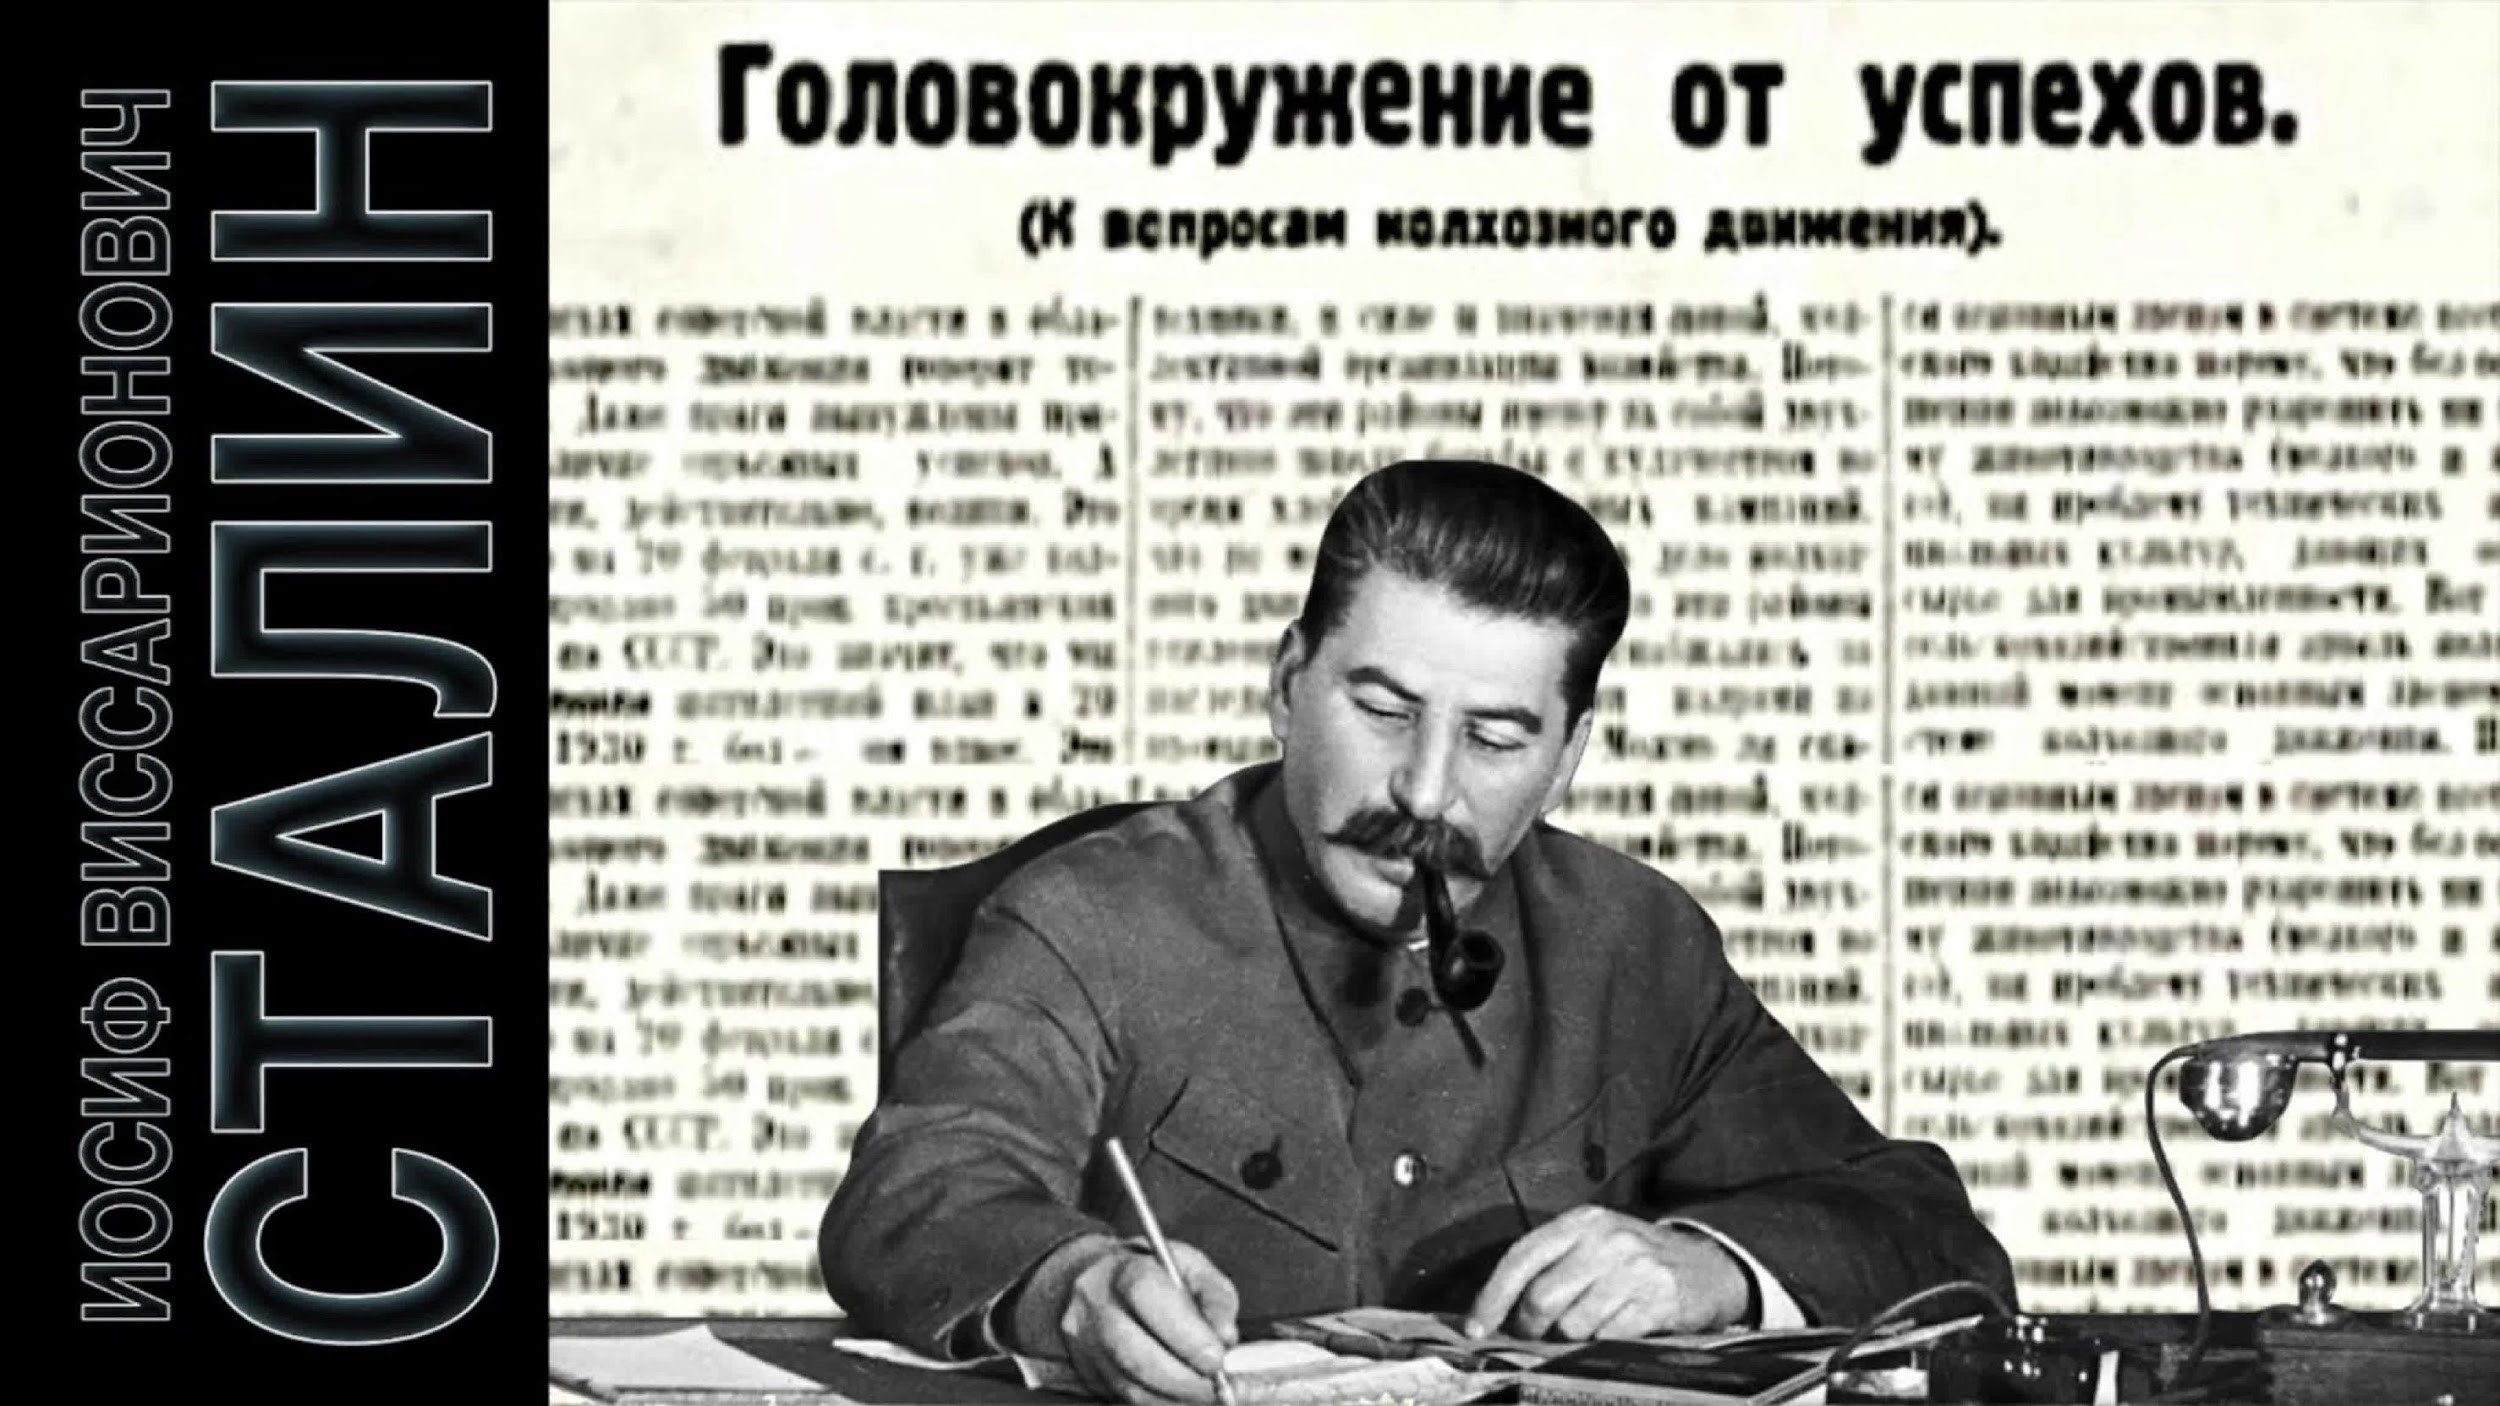 Рис. 4. Публикация И. В. Сталина